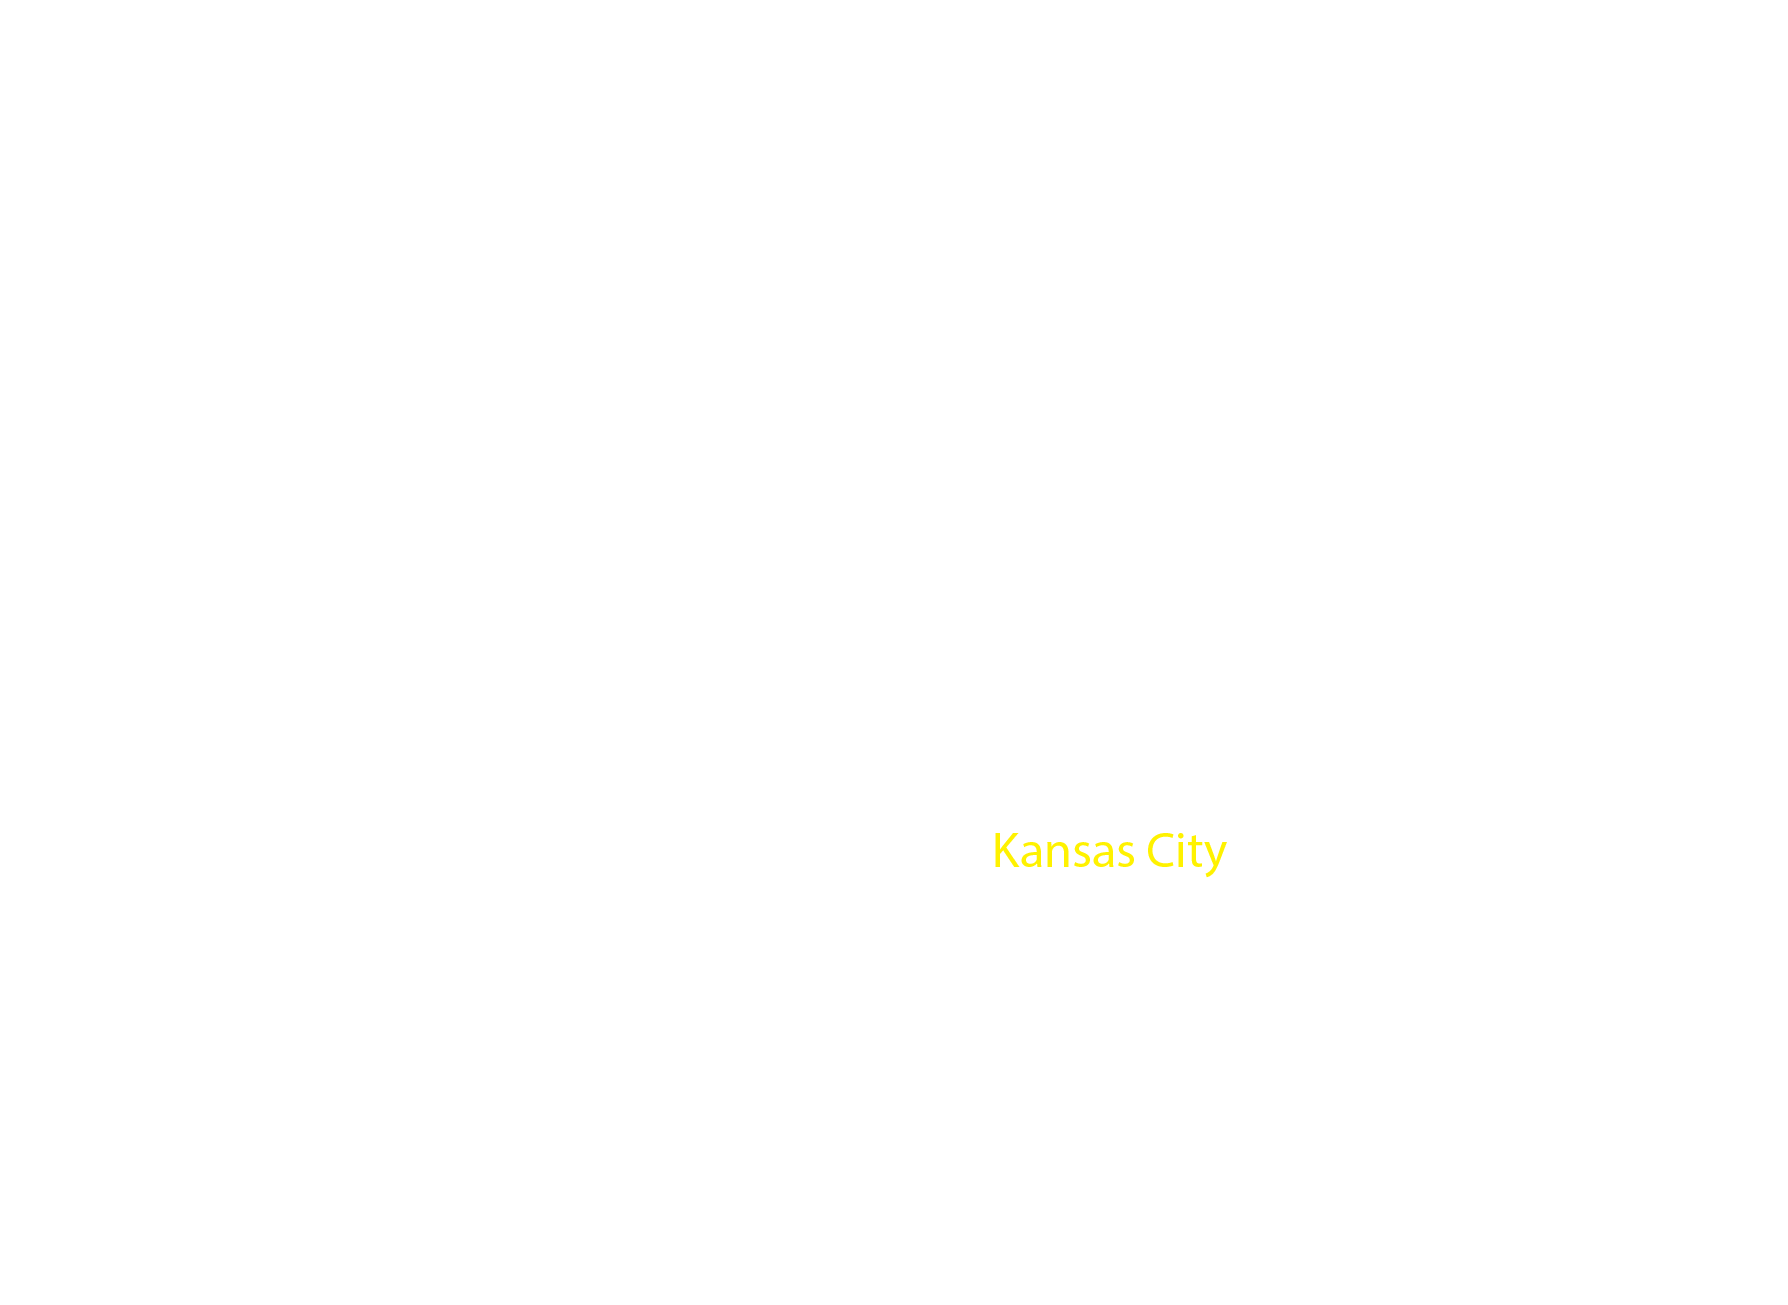 Kansas-City label